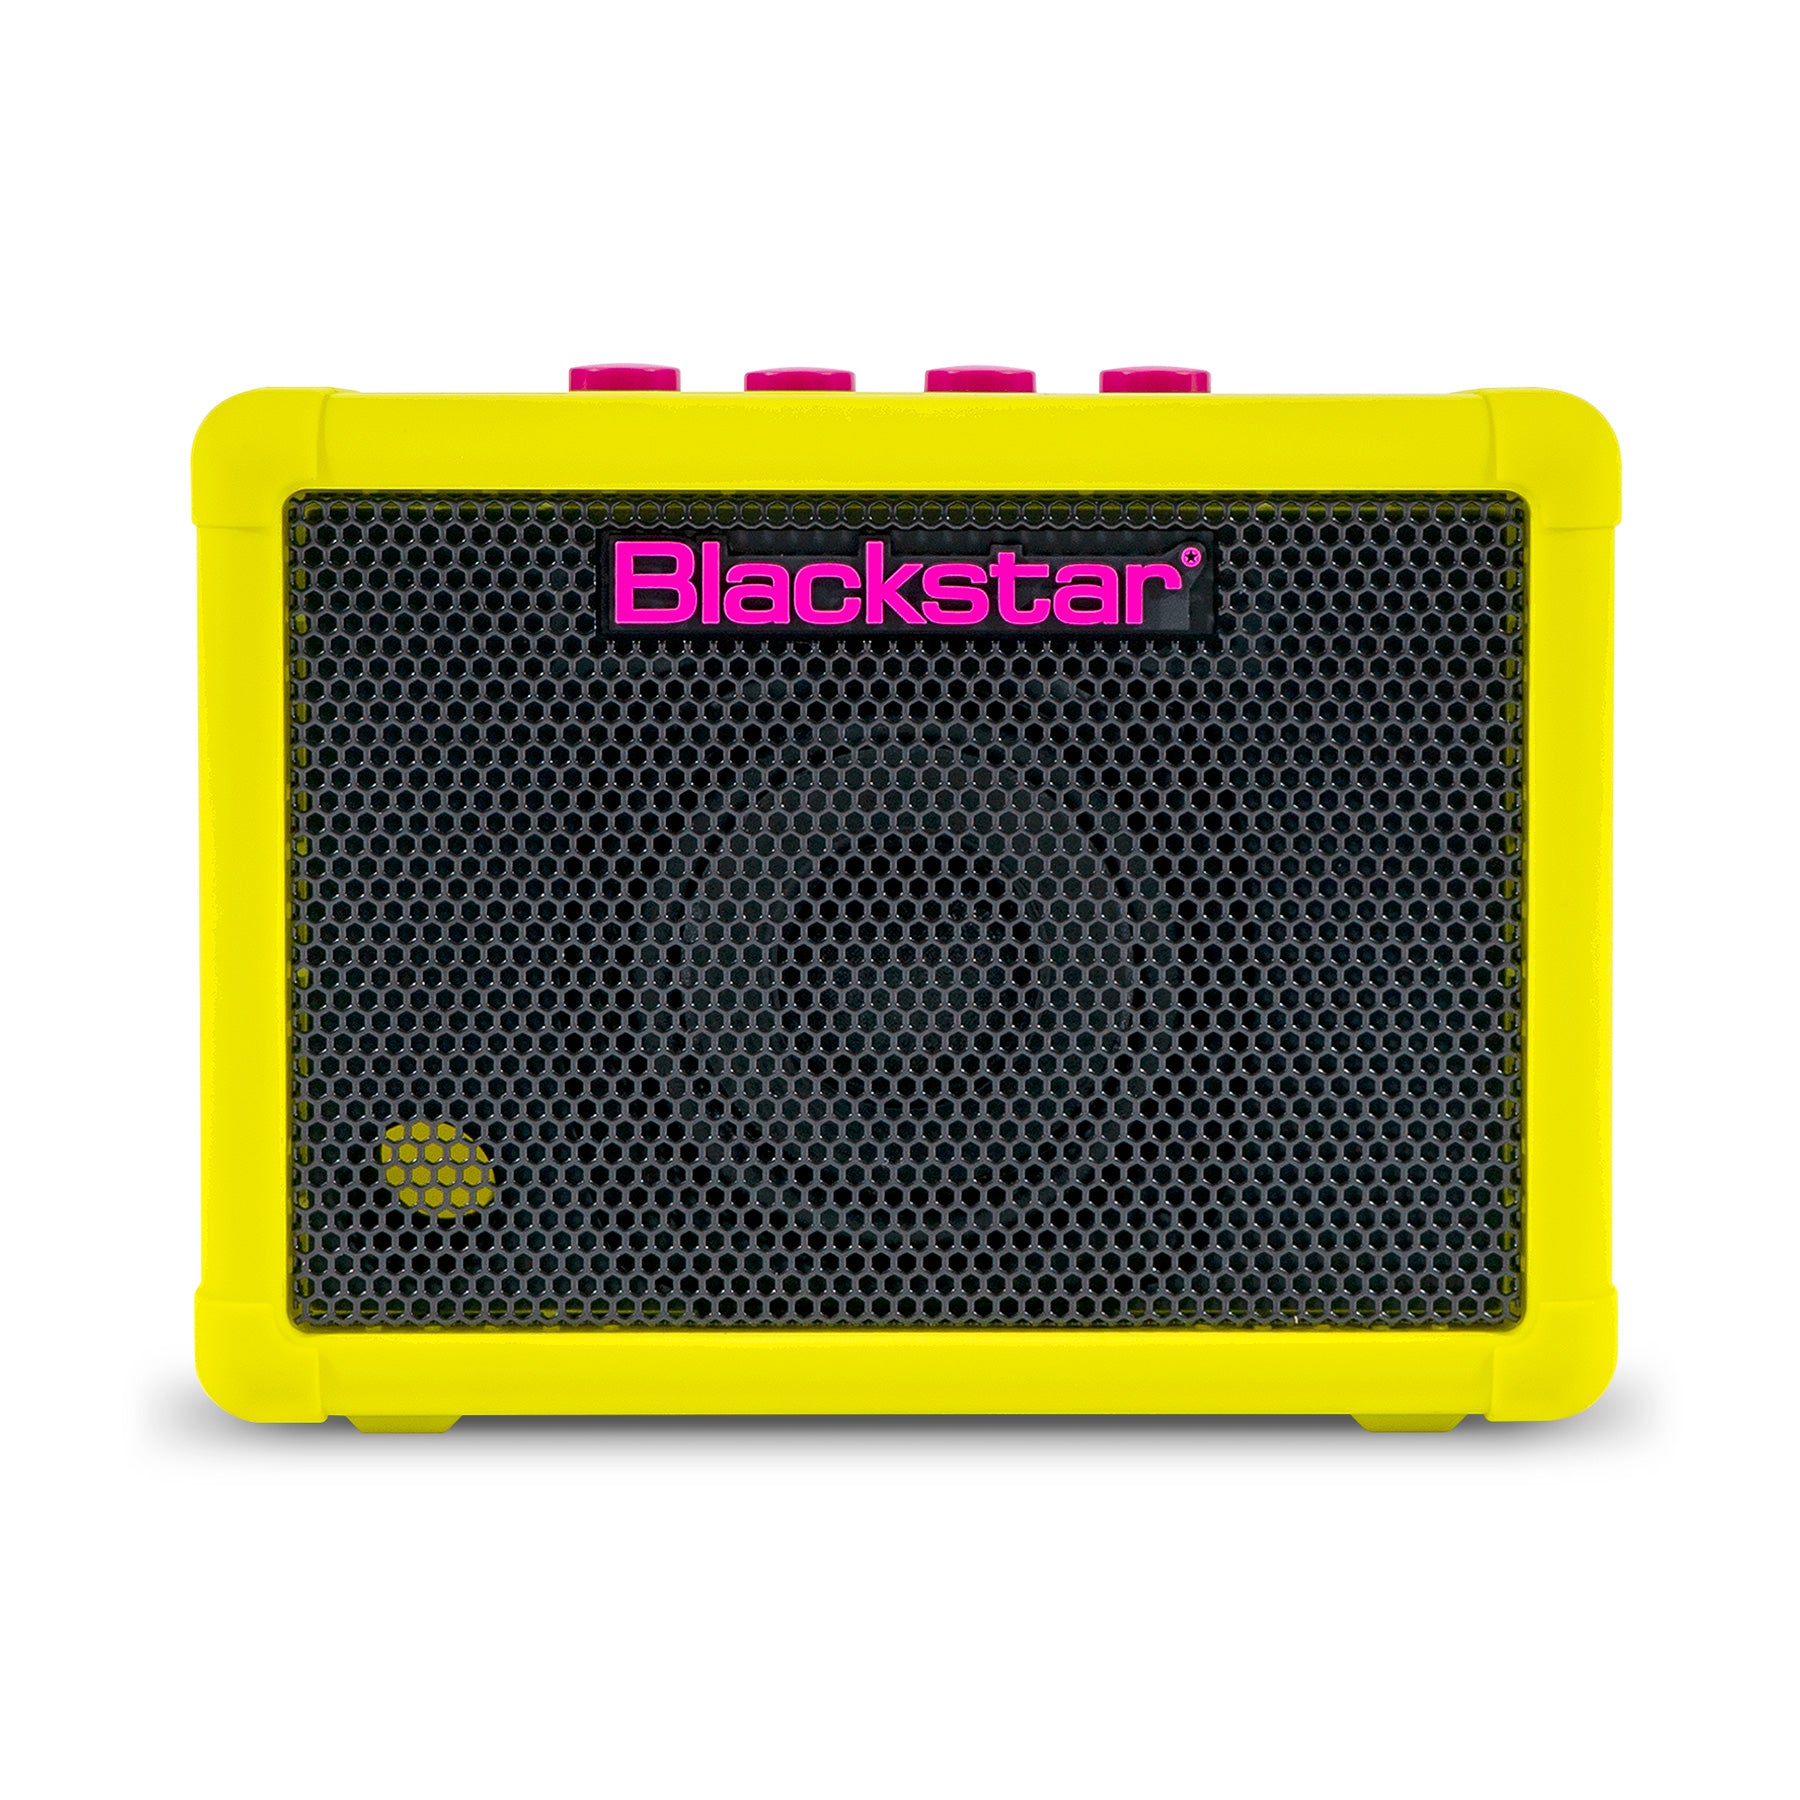 Blackstar FLY 3 BASS Mini Amplifier (Neon Yellow, Limited Edition) 低音結他擴音器